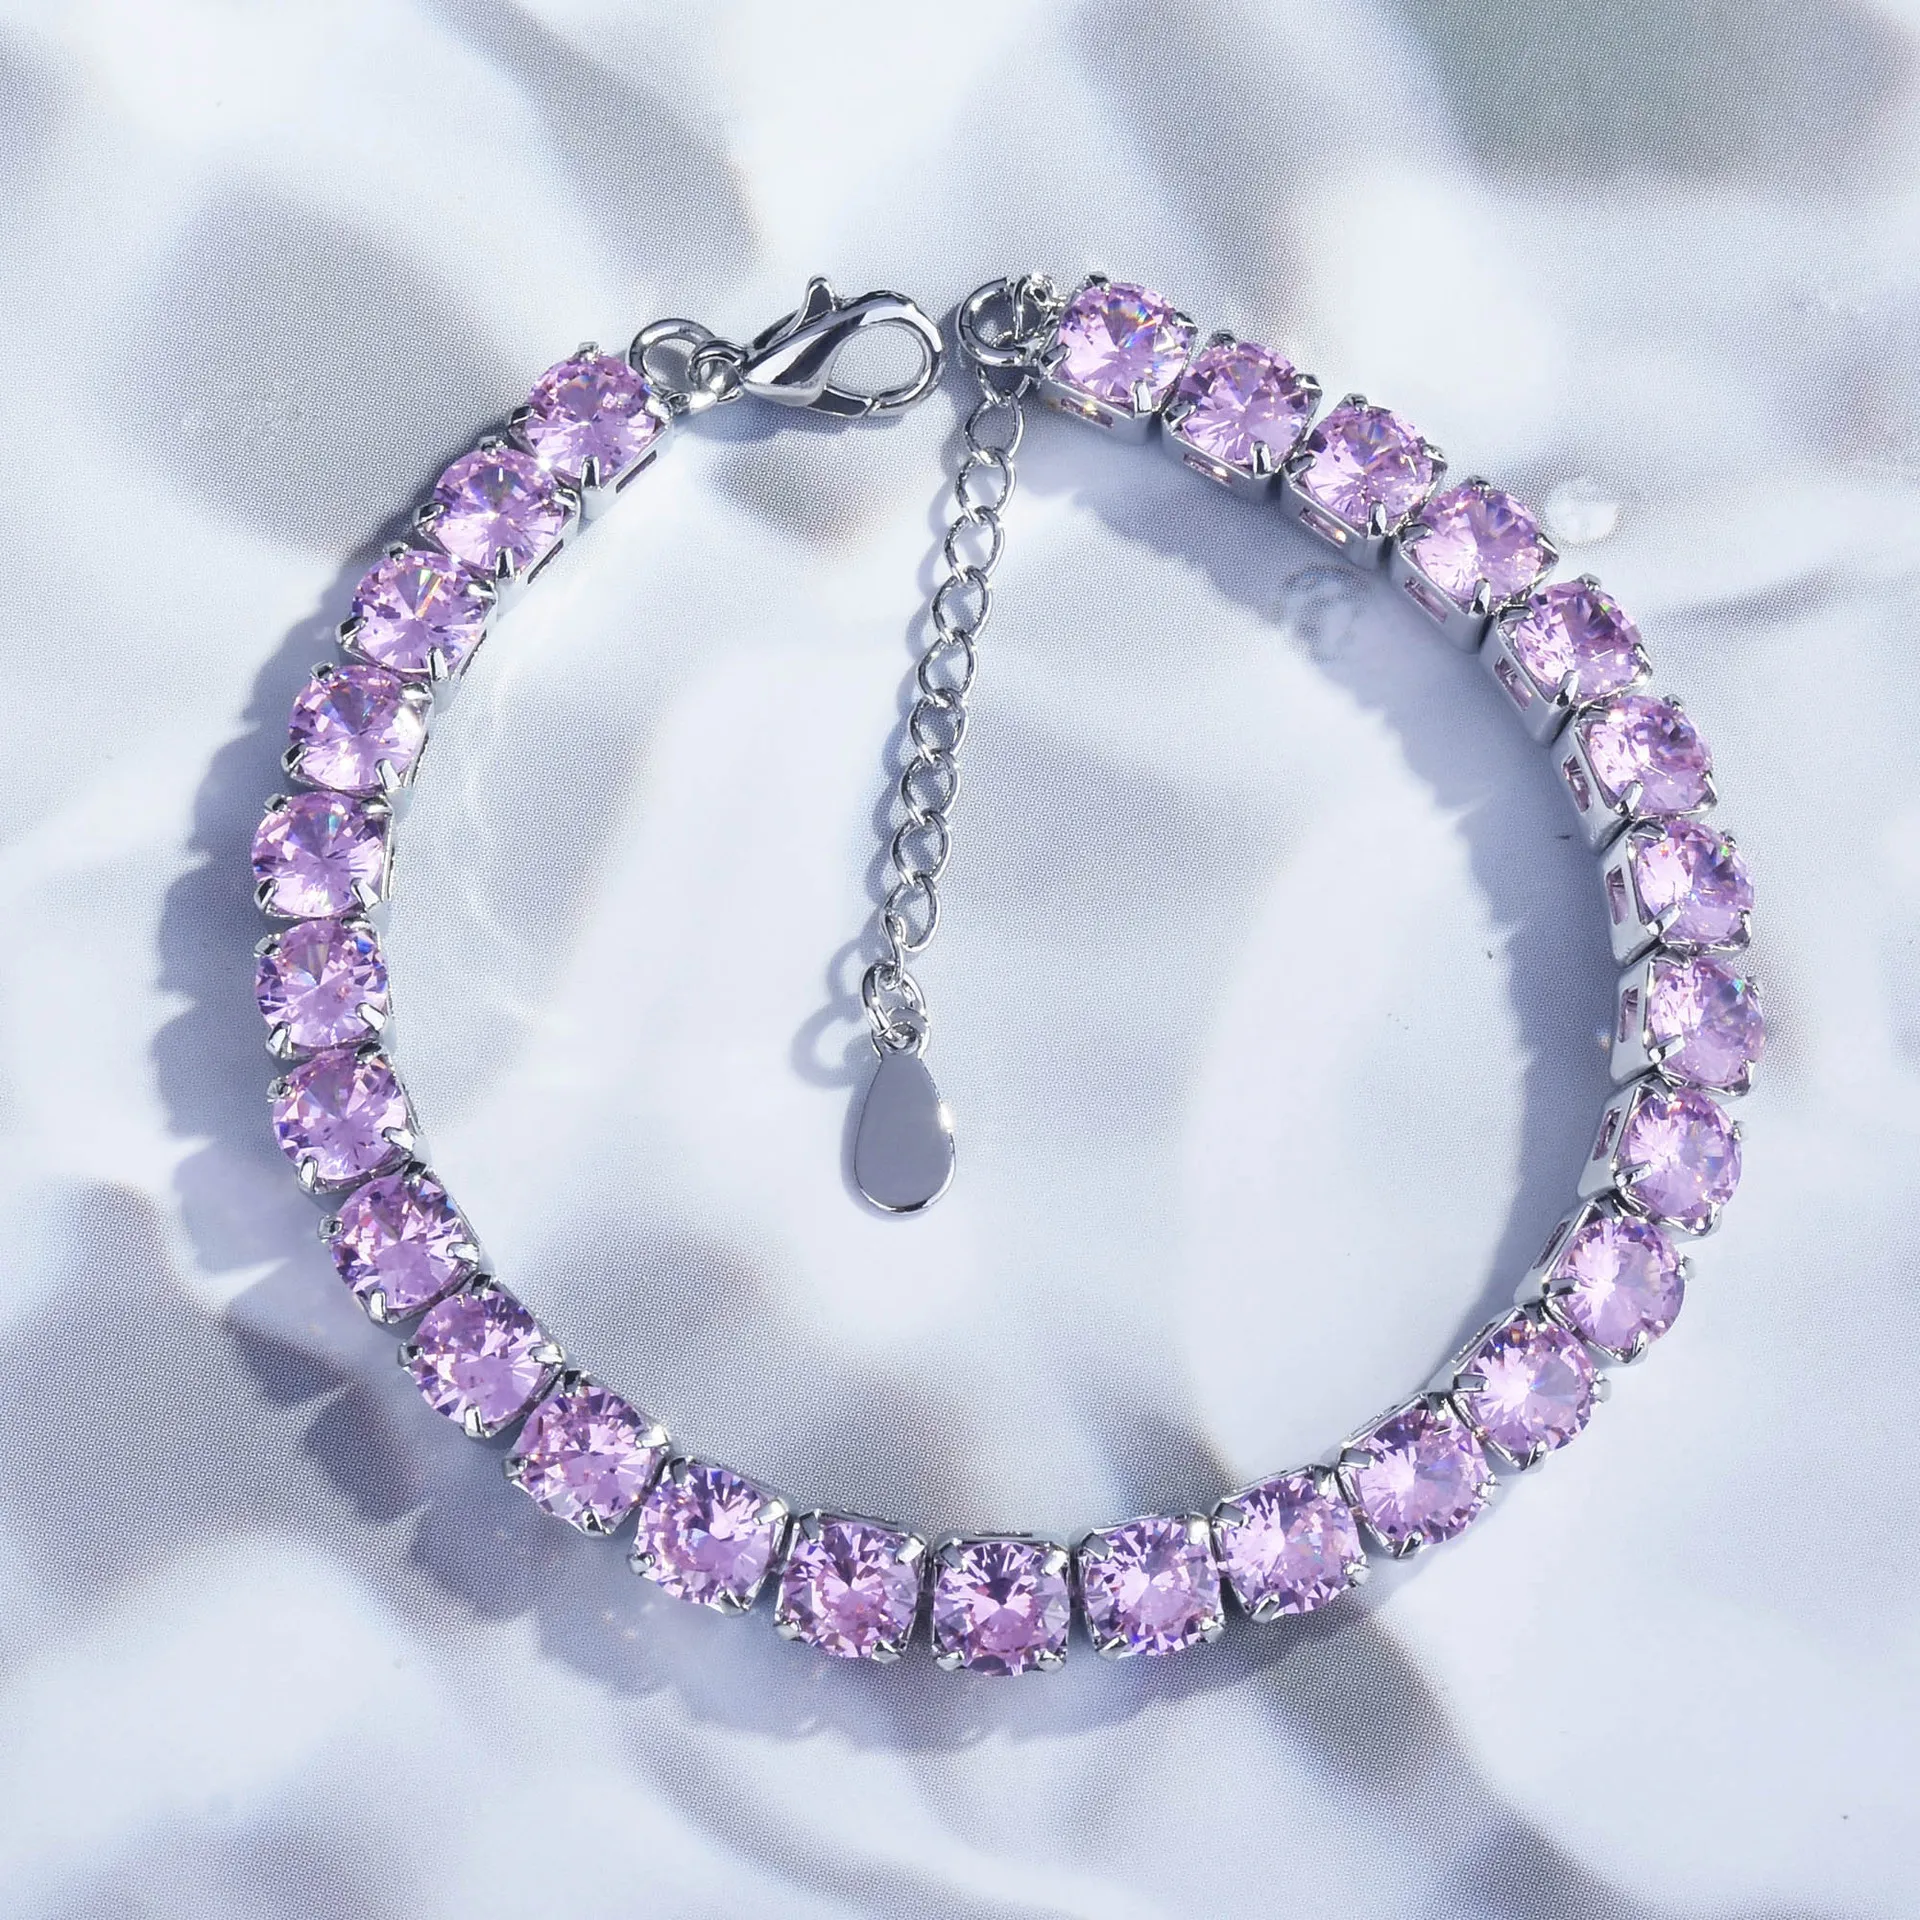 

Wholesale Claw Setting Full Diamond Bracelet Pink Shining Tennis Chain Rhinestone Crystal Bracelet Women Fashion Jewelry, Picture shows